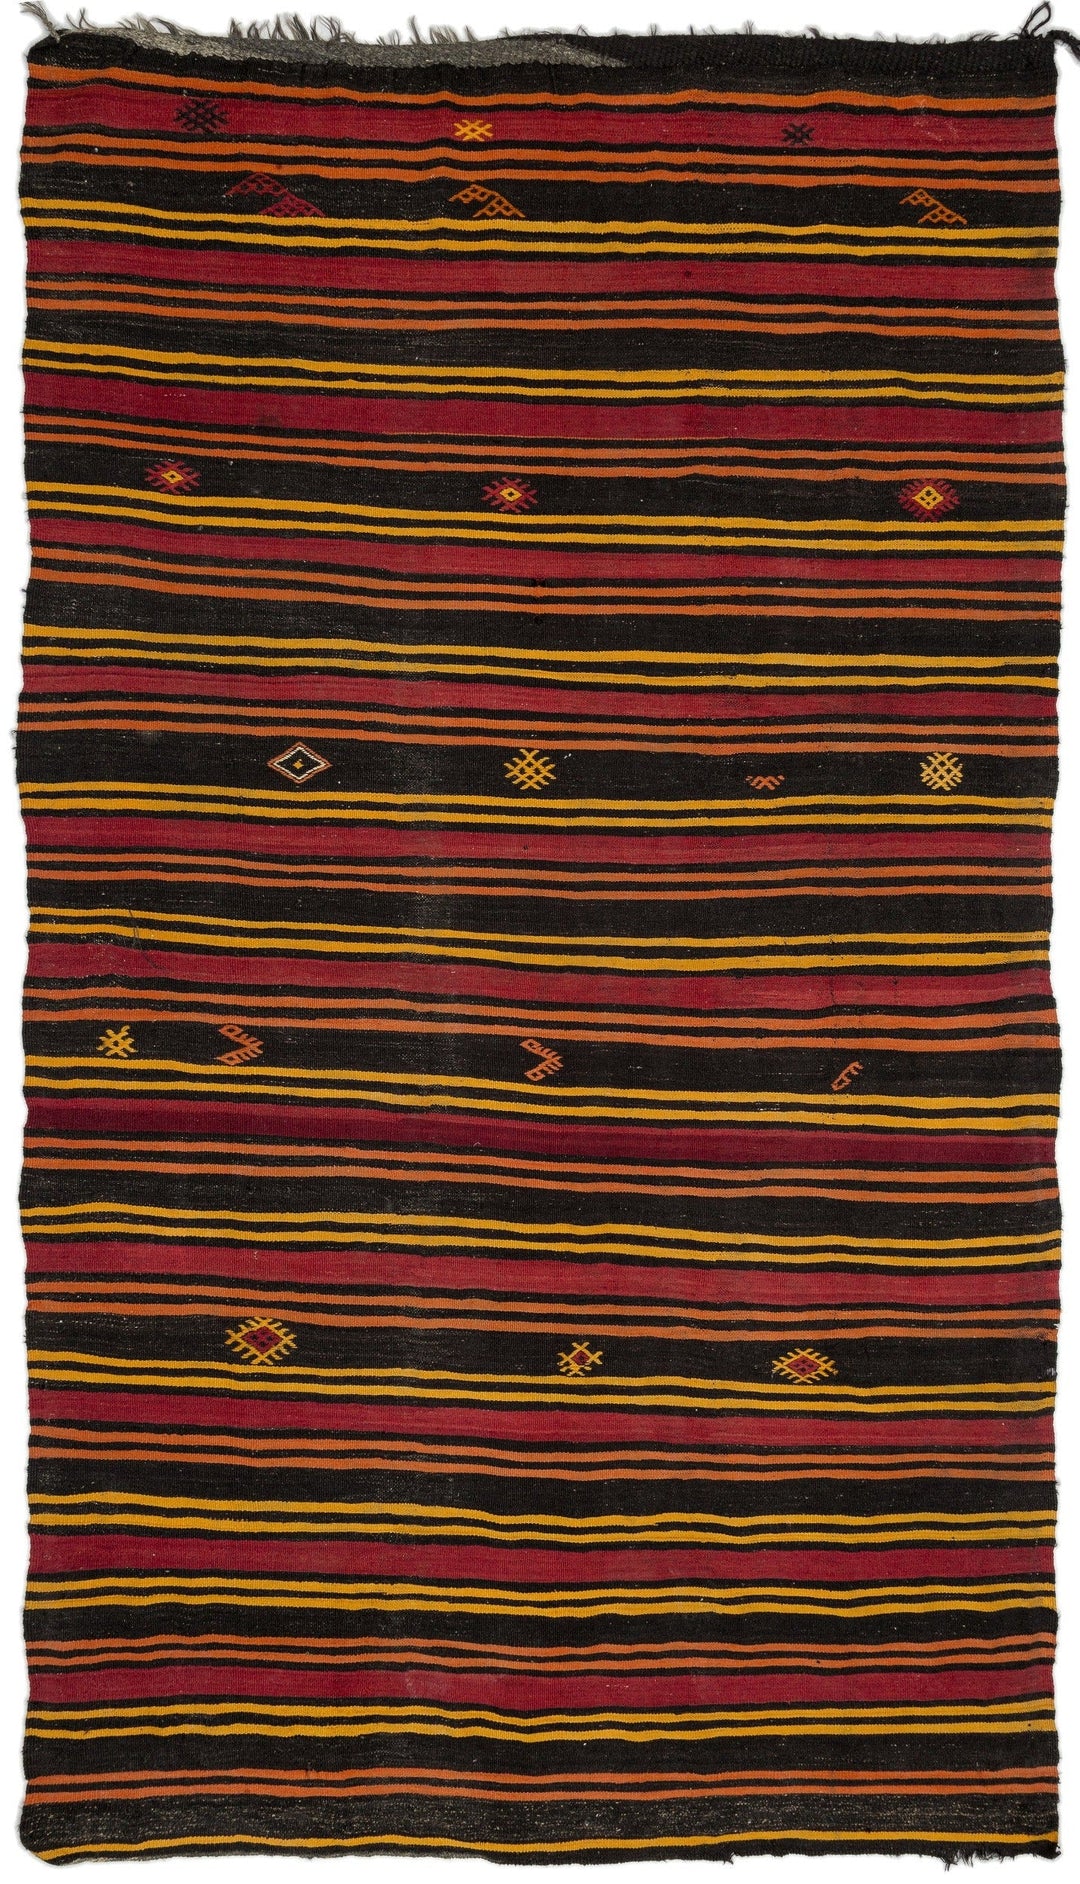 Cretan Beige Striped Wool Hand-Woven Carpet 208 x 373